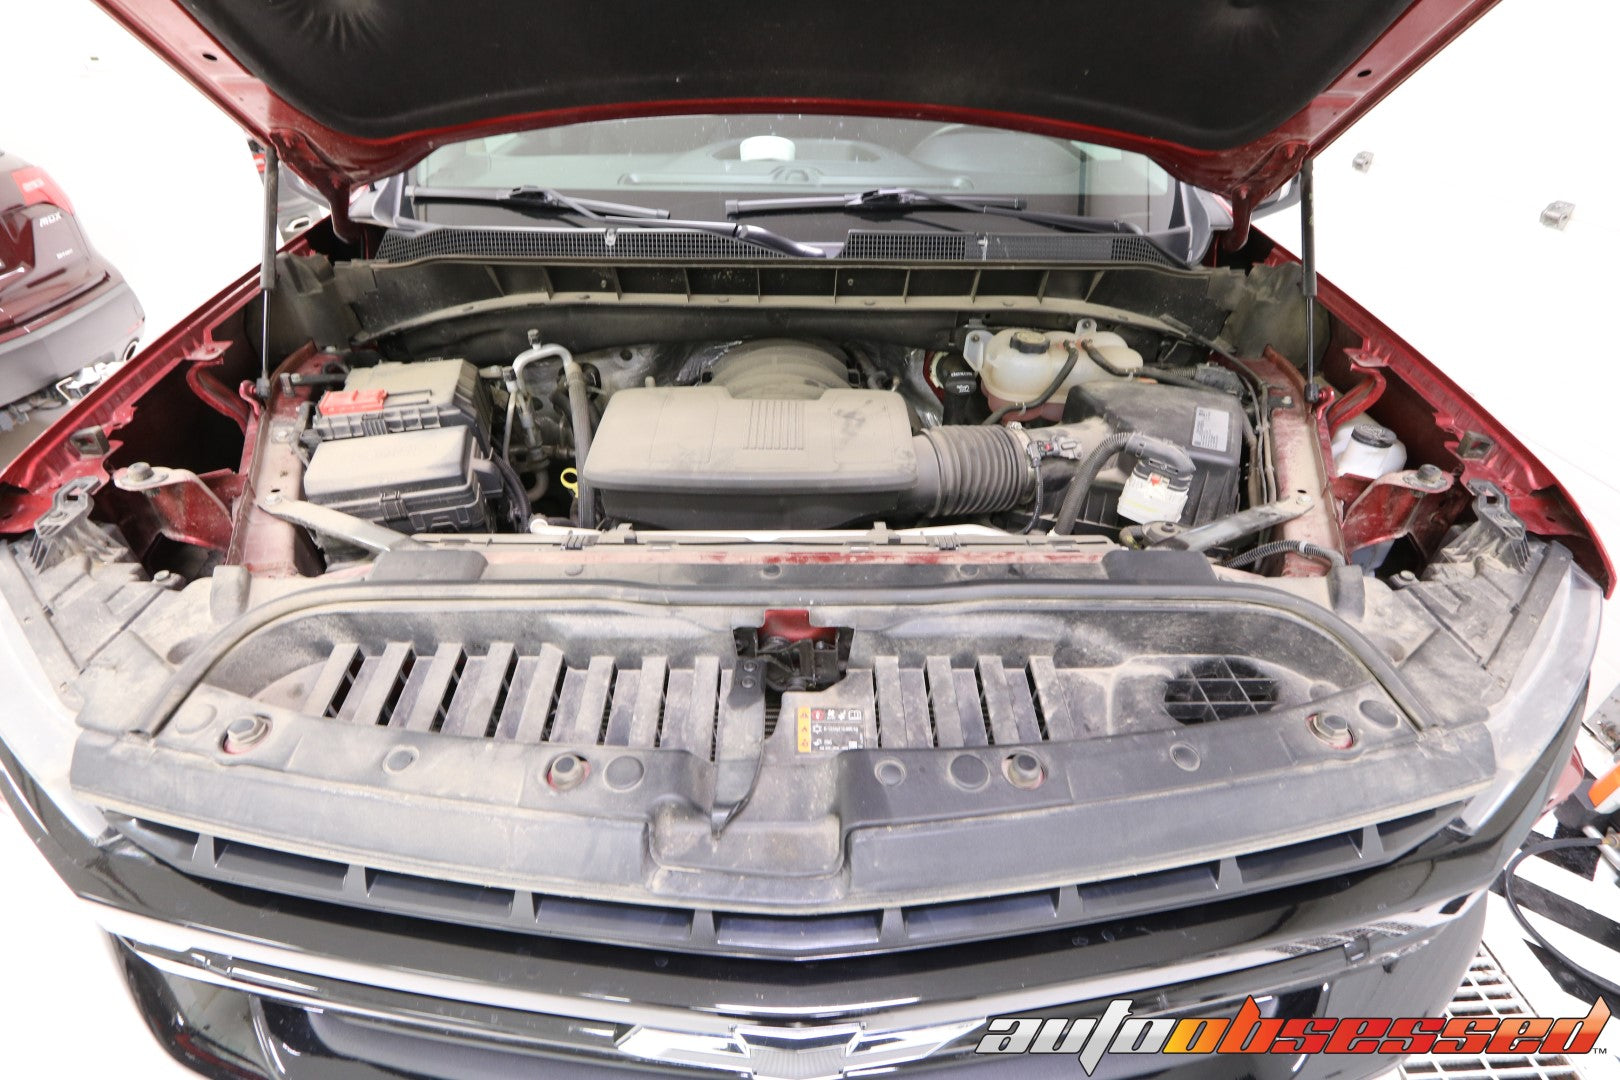 2021 Chevrolet Silverado Car Detailing - Auto Obsessed